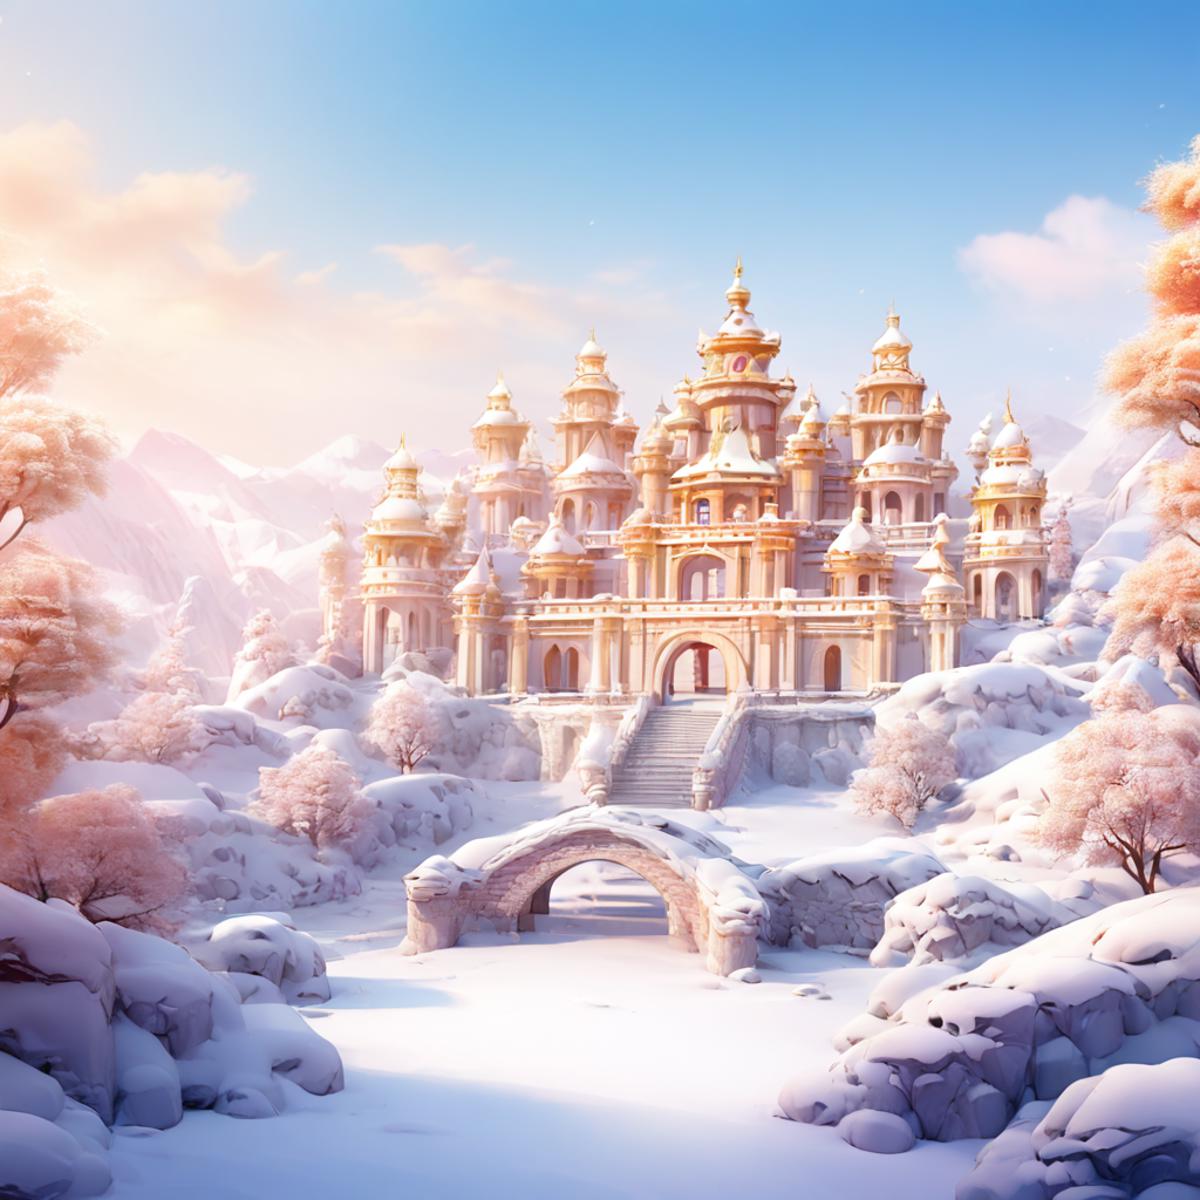 童话王宫  XL Fairy Tale Palace image by Chenkin